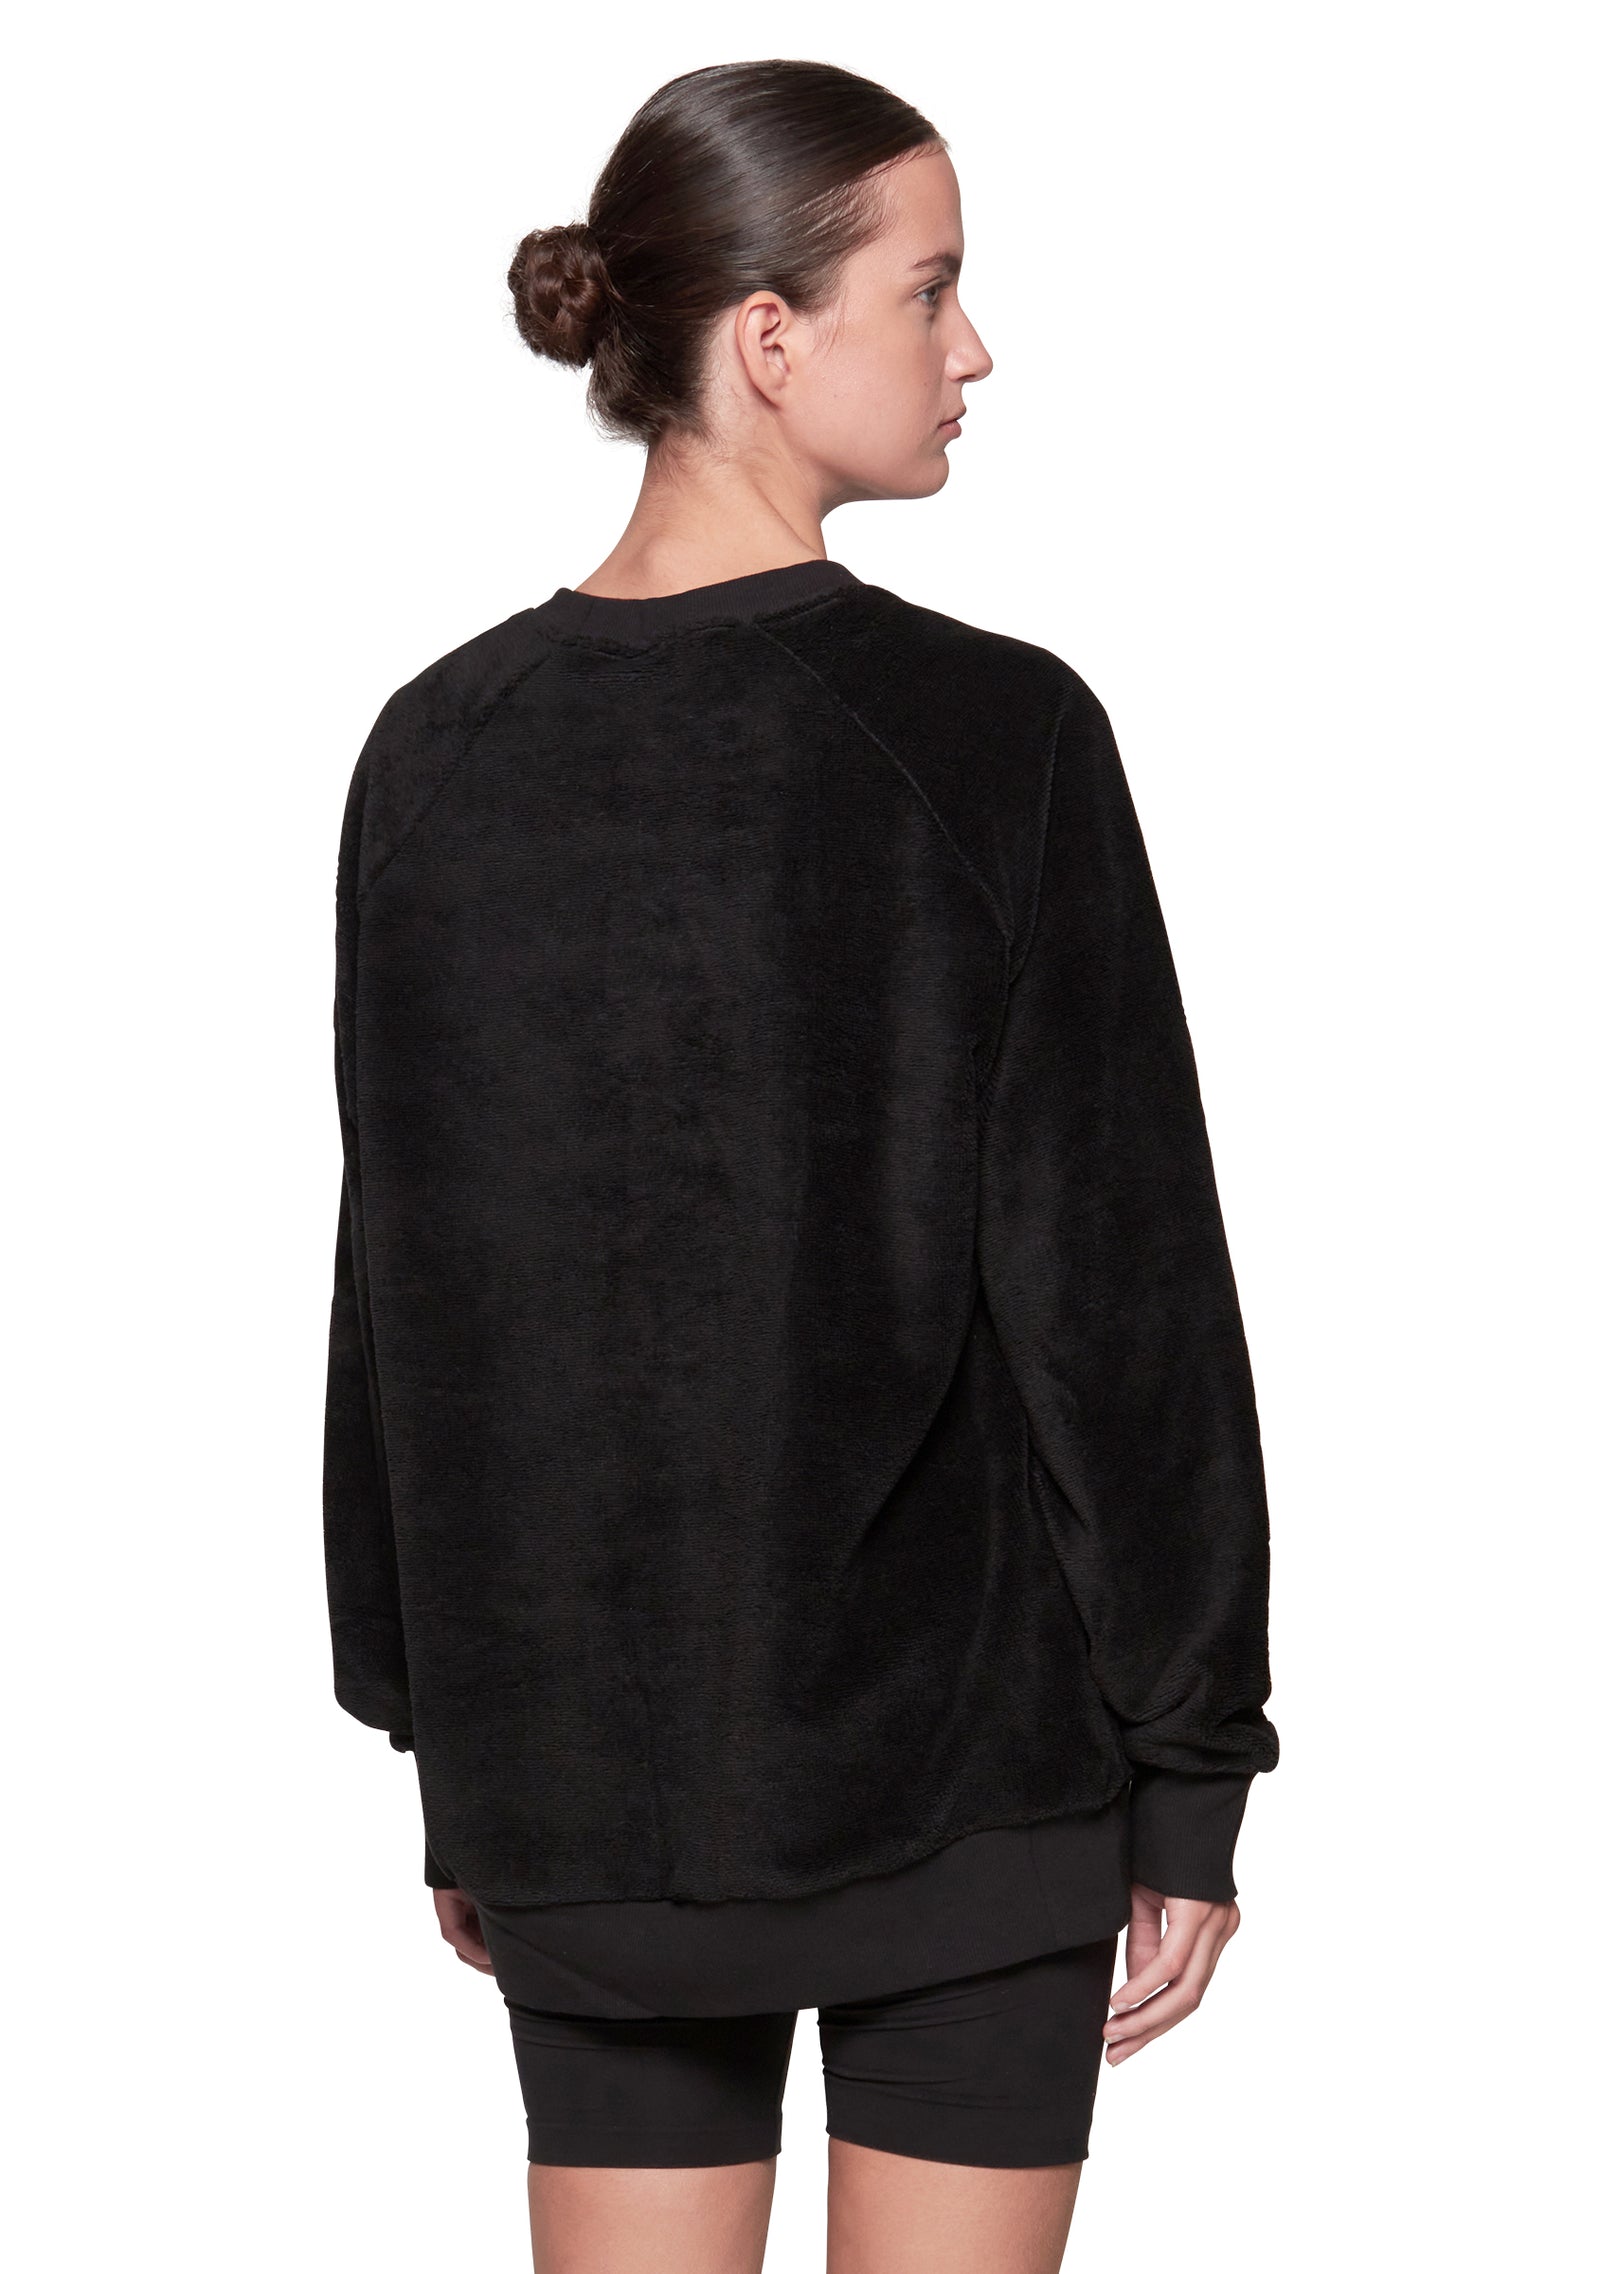 Black & Brown Embroidered Fleece Sweatshirt